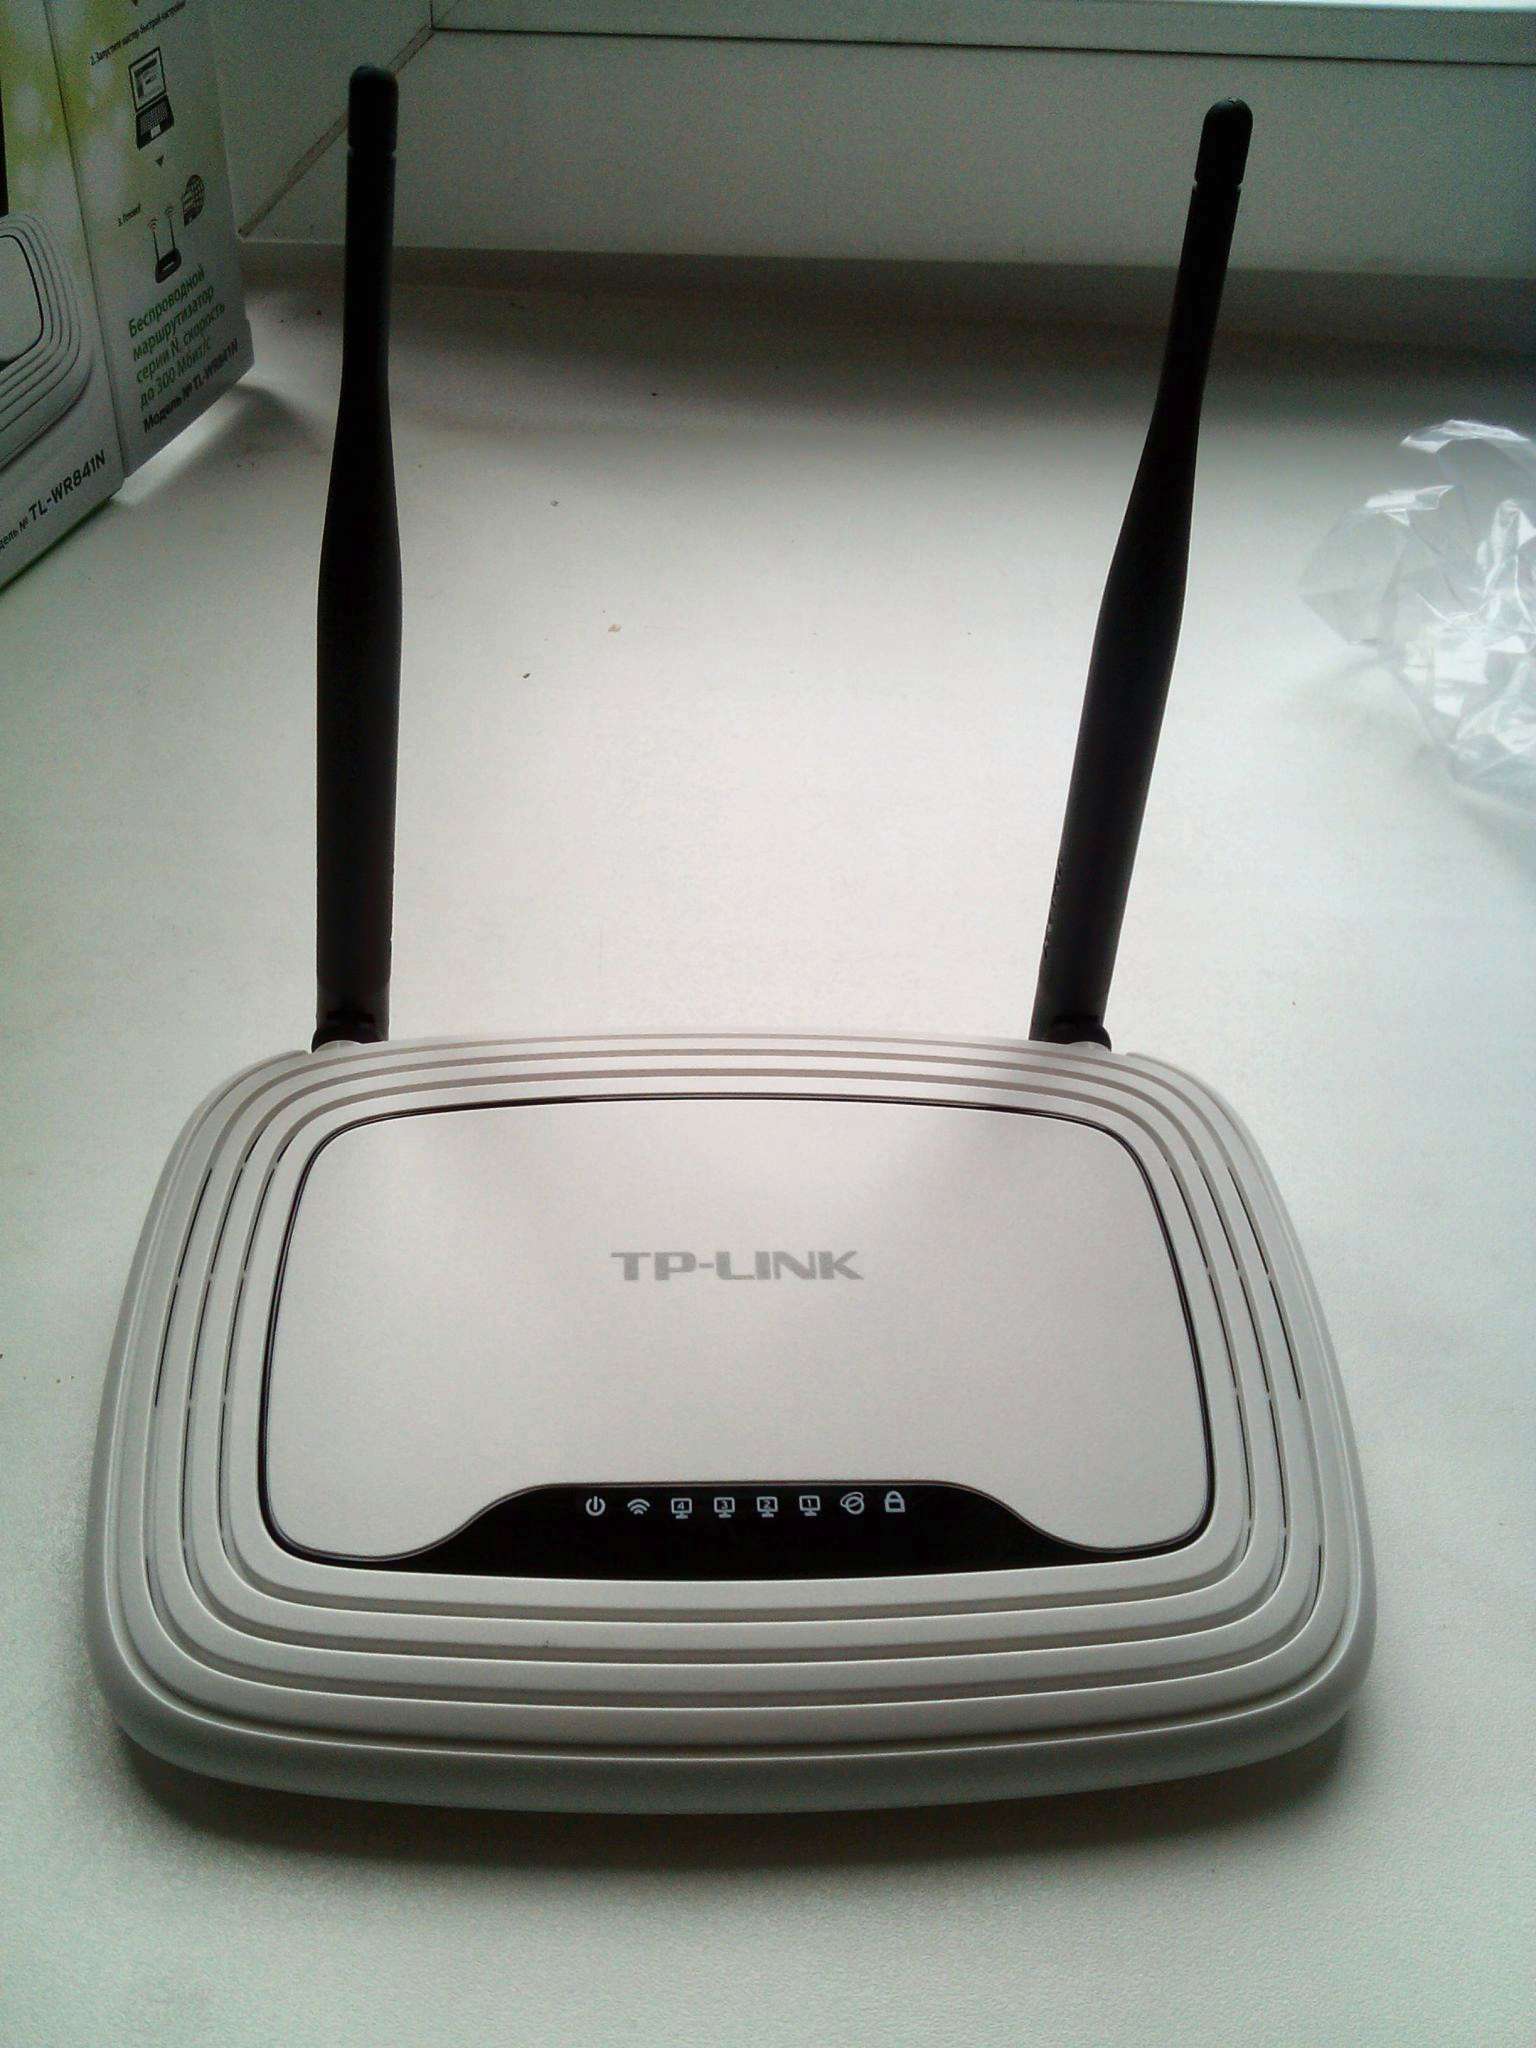 Модели роутера tp link. Wi-Fi роутер TP-link TL-wr841n. TP-link TL-wr841n. Роутер ТП линк TL-wr841n. Wi-Fi роутер TP-link TL-wr841n, белый.